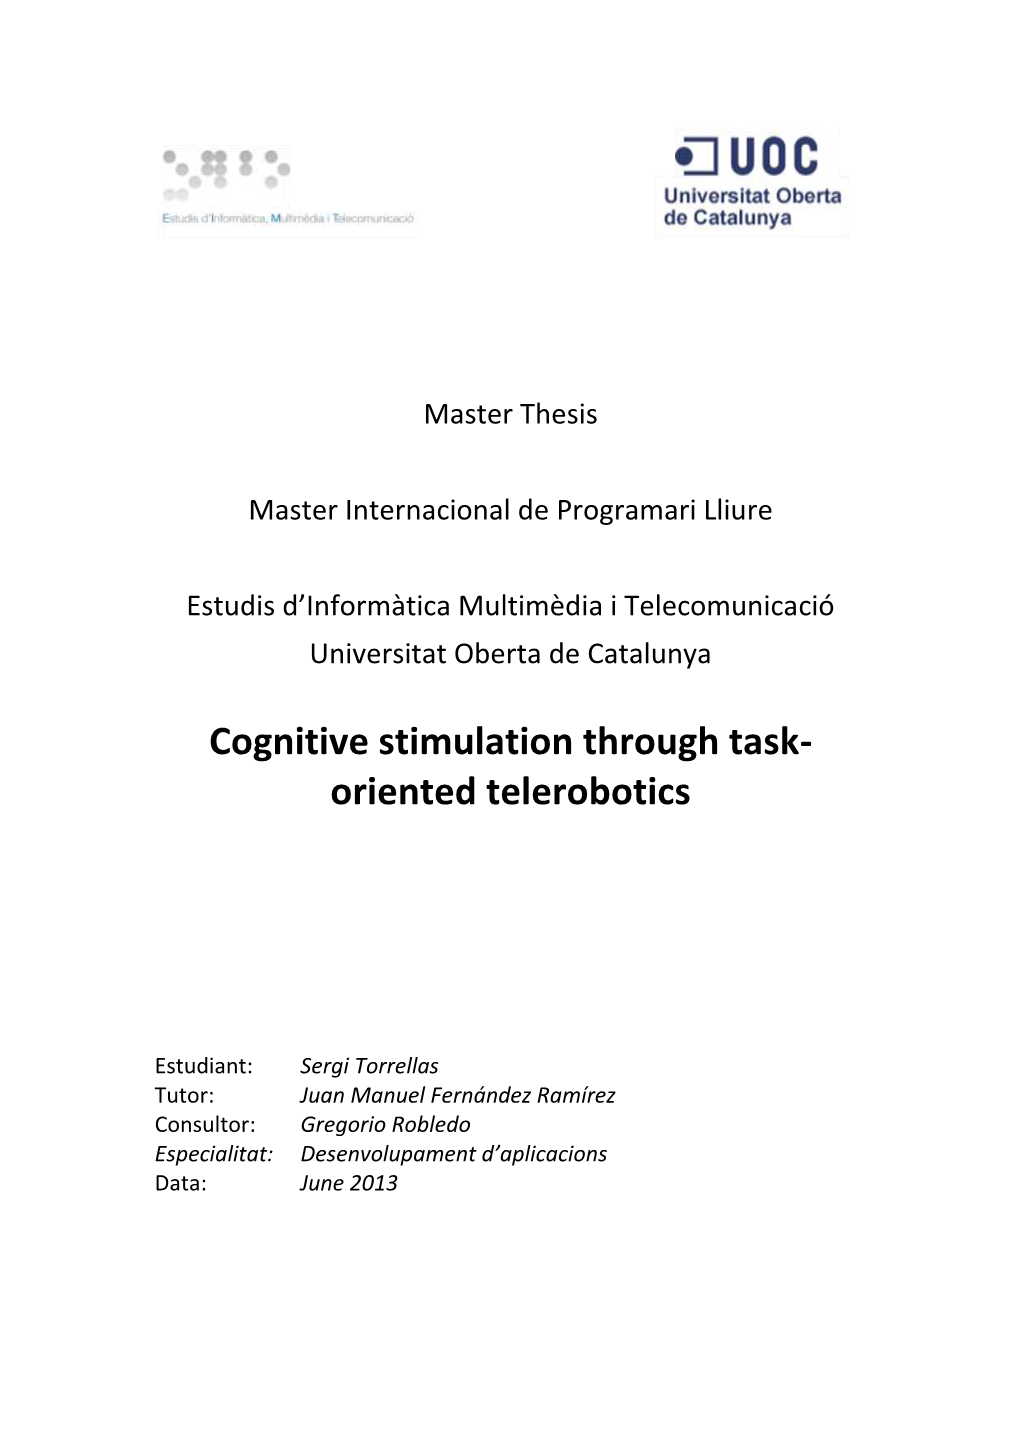 Cognitive Stimulation Through Task-Oriented Telerobotics Has Been Accomplished